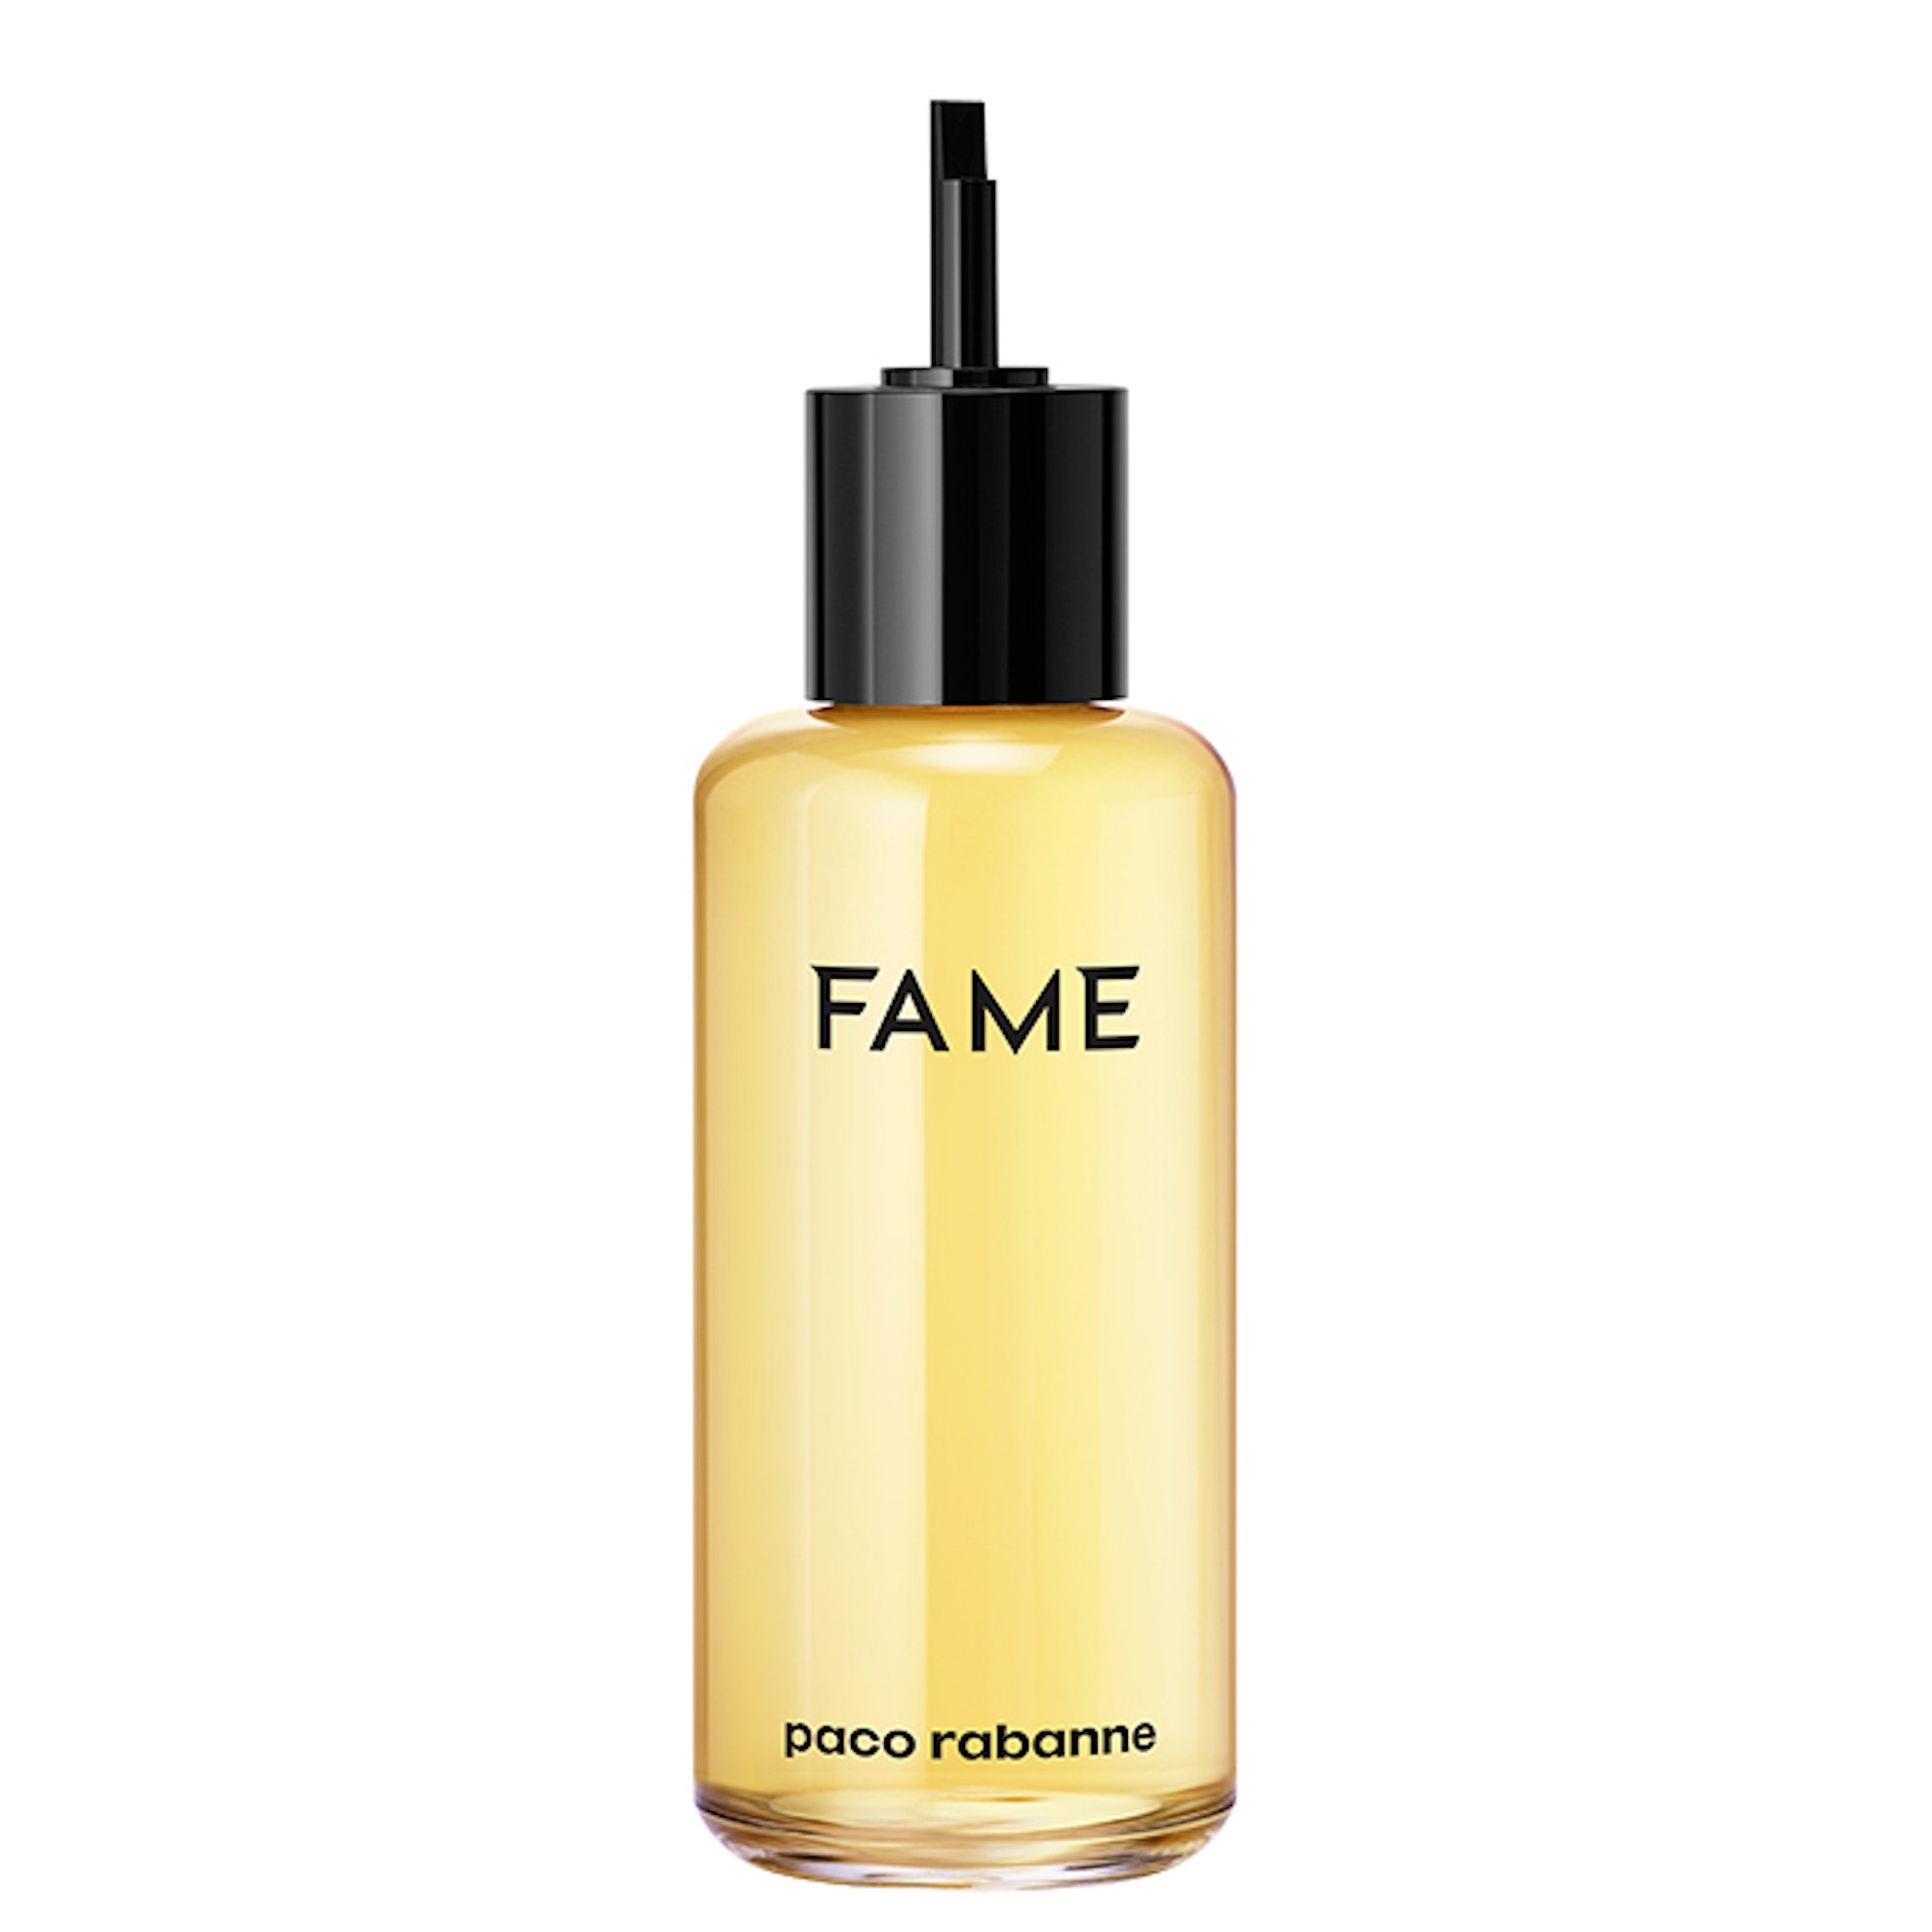 Paco Rabanne Fame Eau de Parfum 200ml Refill - Peacock Bazaar